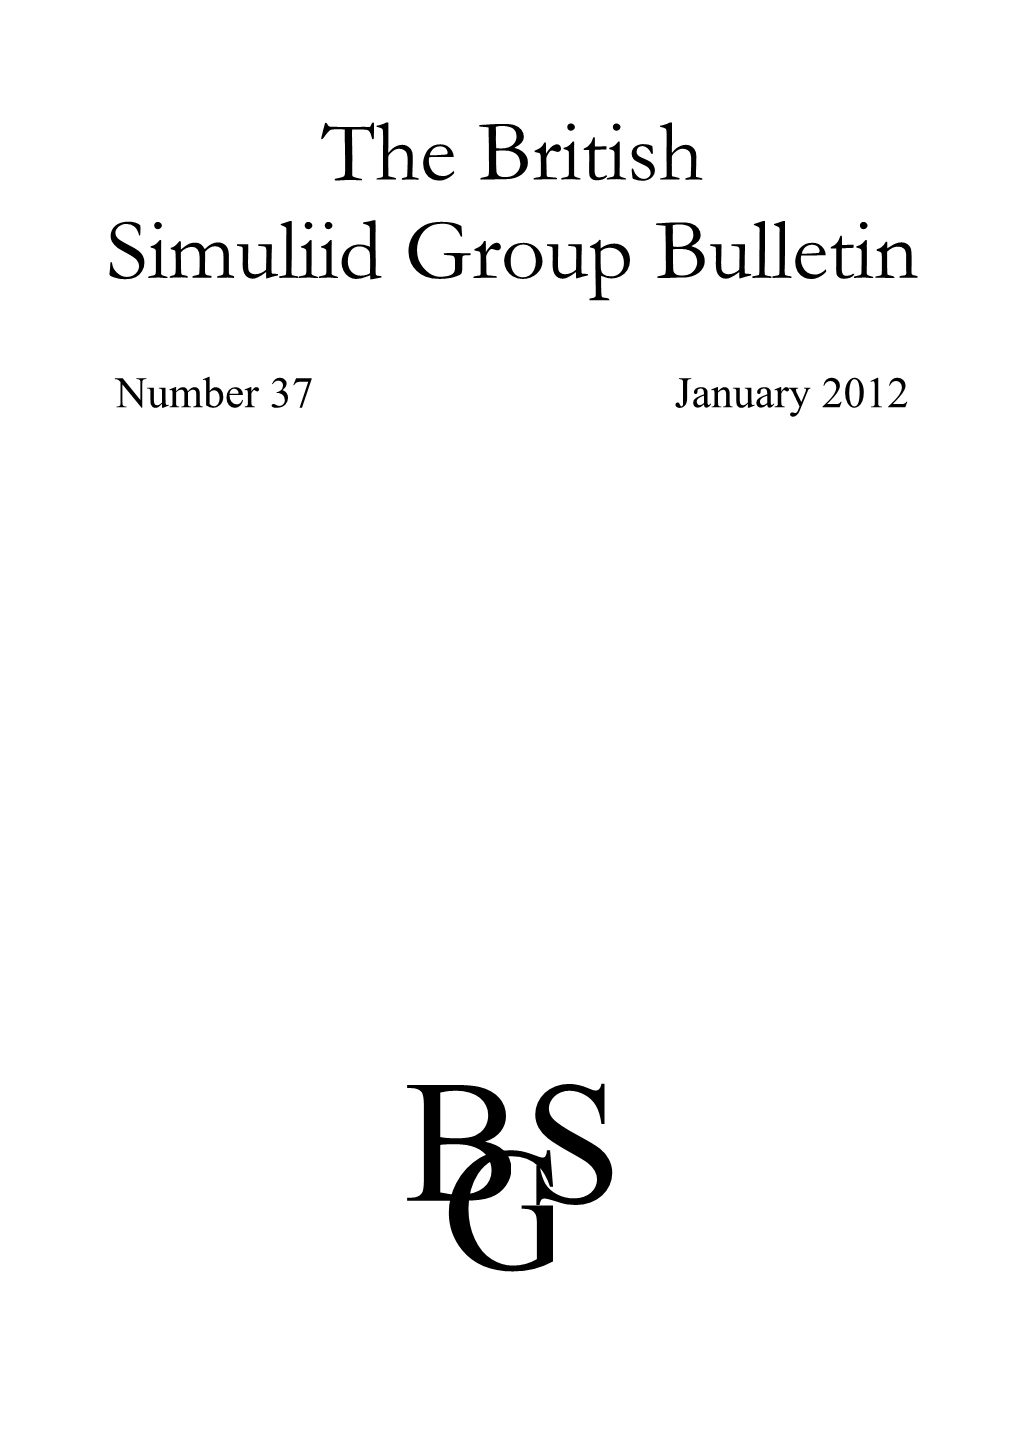 The British Simuliid Group Bulletin